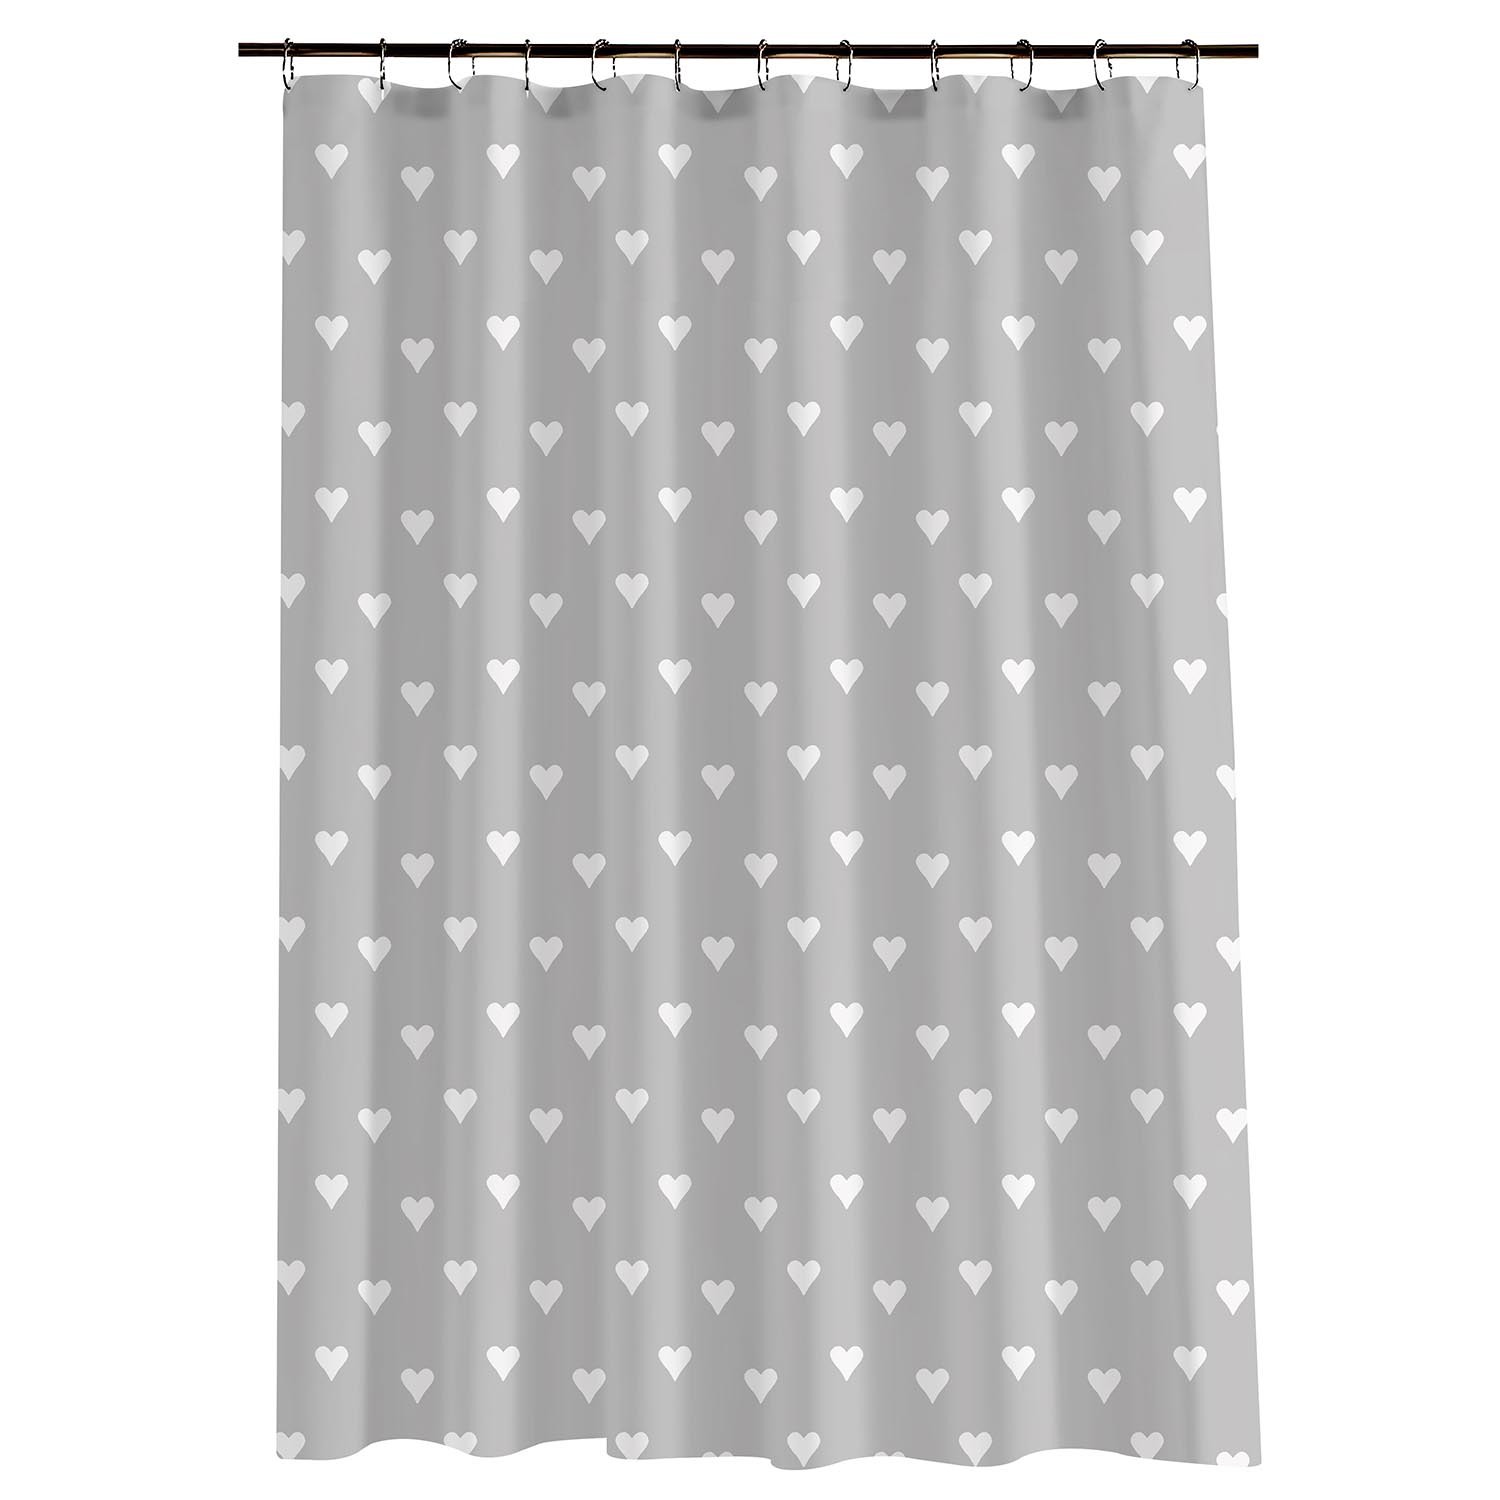 Grey Hearts Shower Curtain 180 x 180cm Image 2